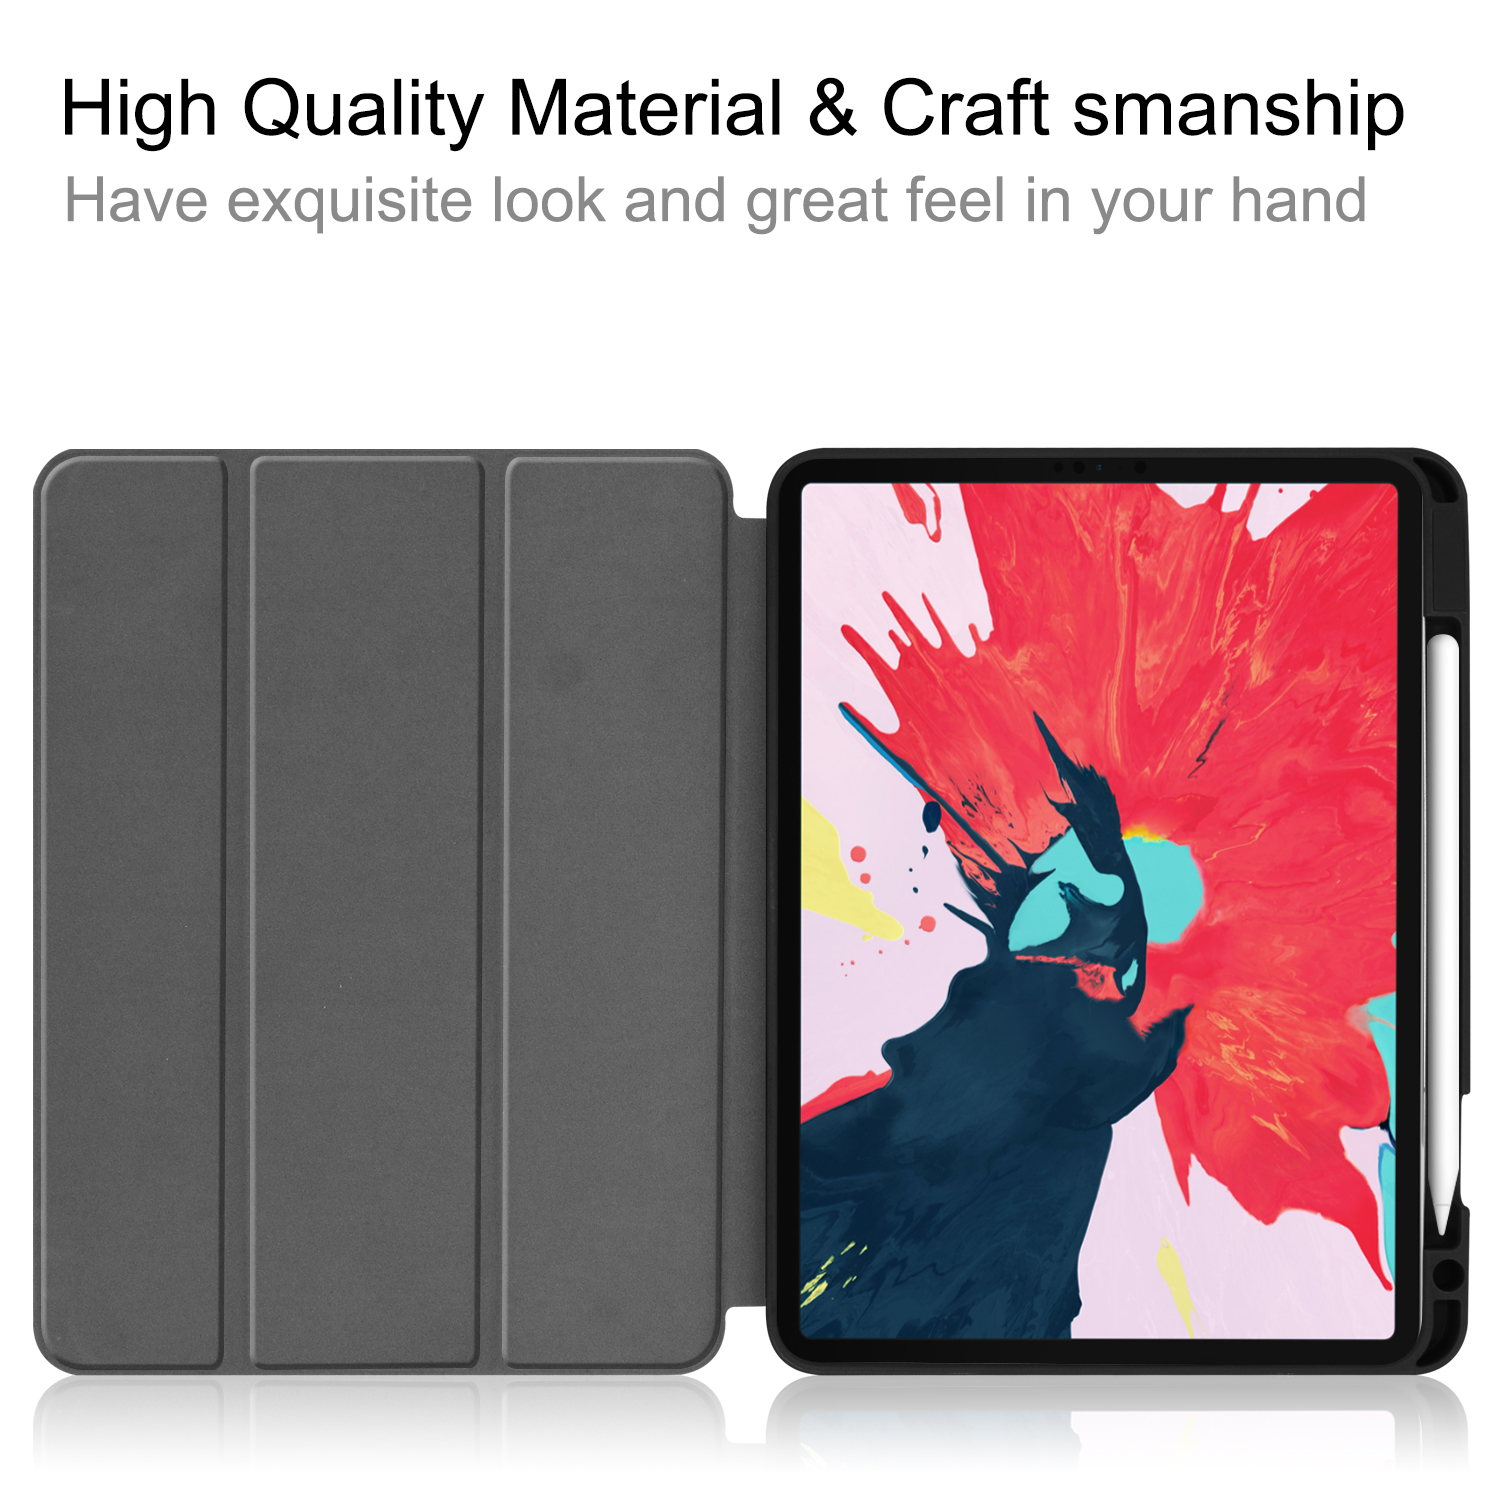 LOBWERK Hülle Schutzhülle Bookcover für iPad 2020 Zoll Rot 11 Pro Kunstleder, Apple